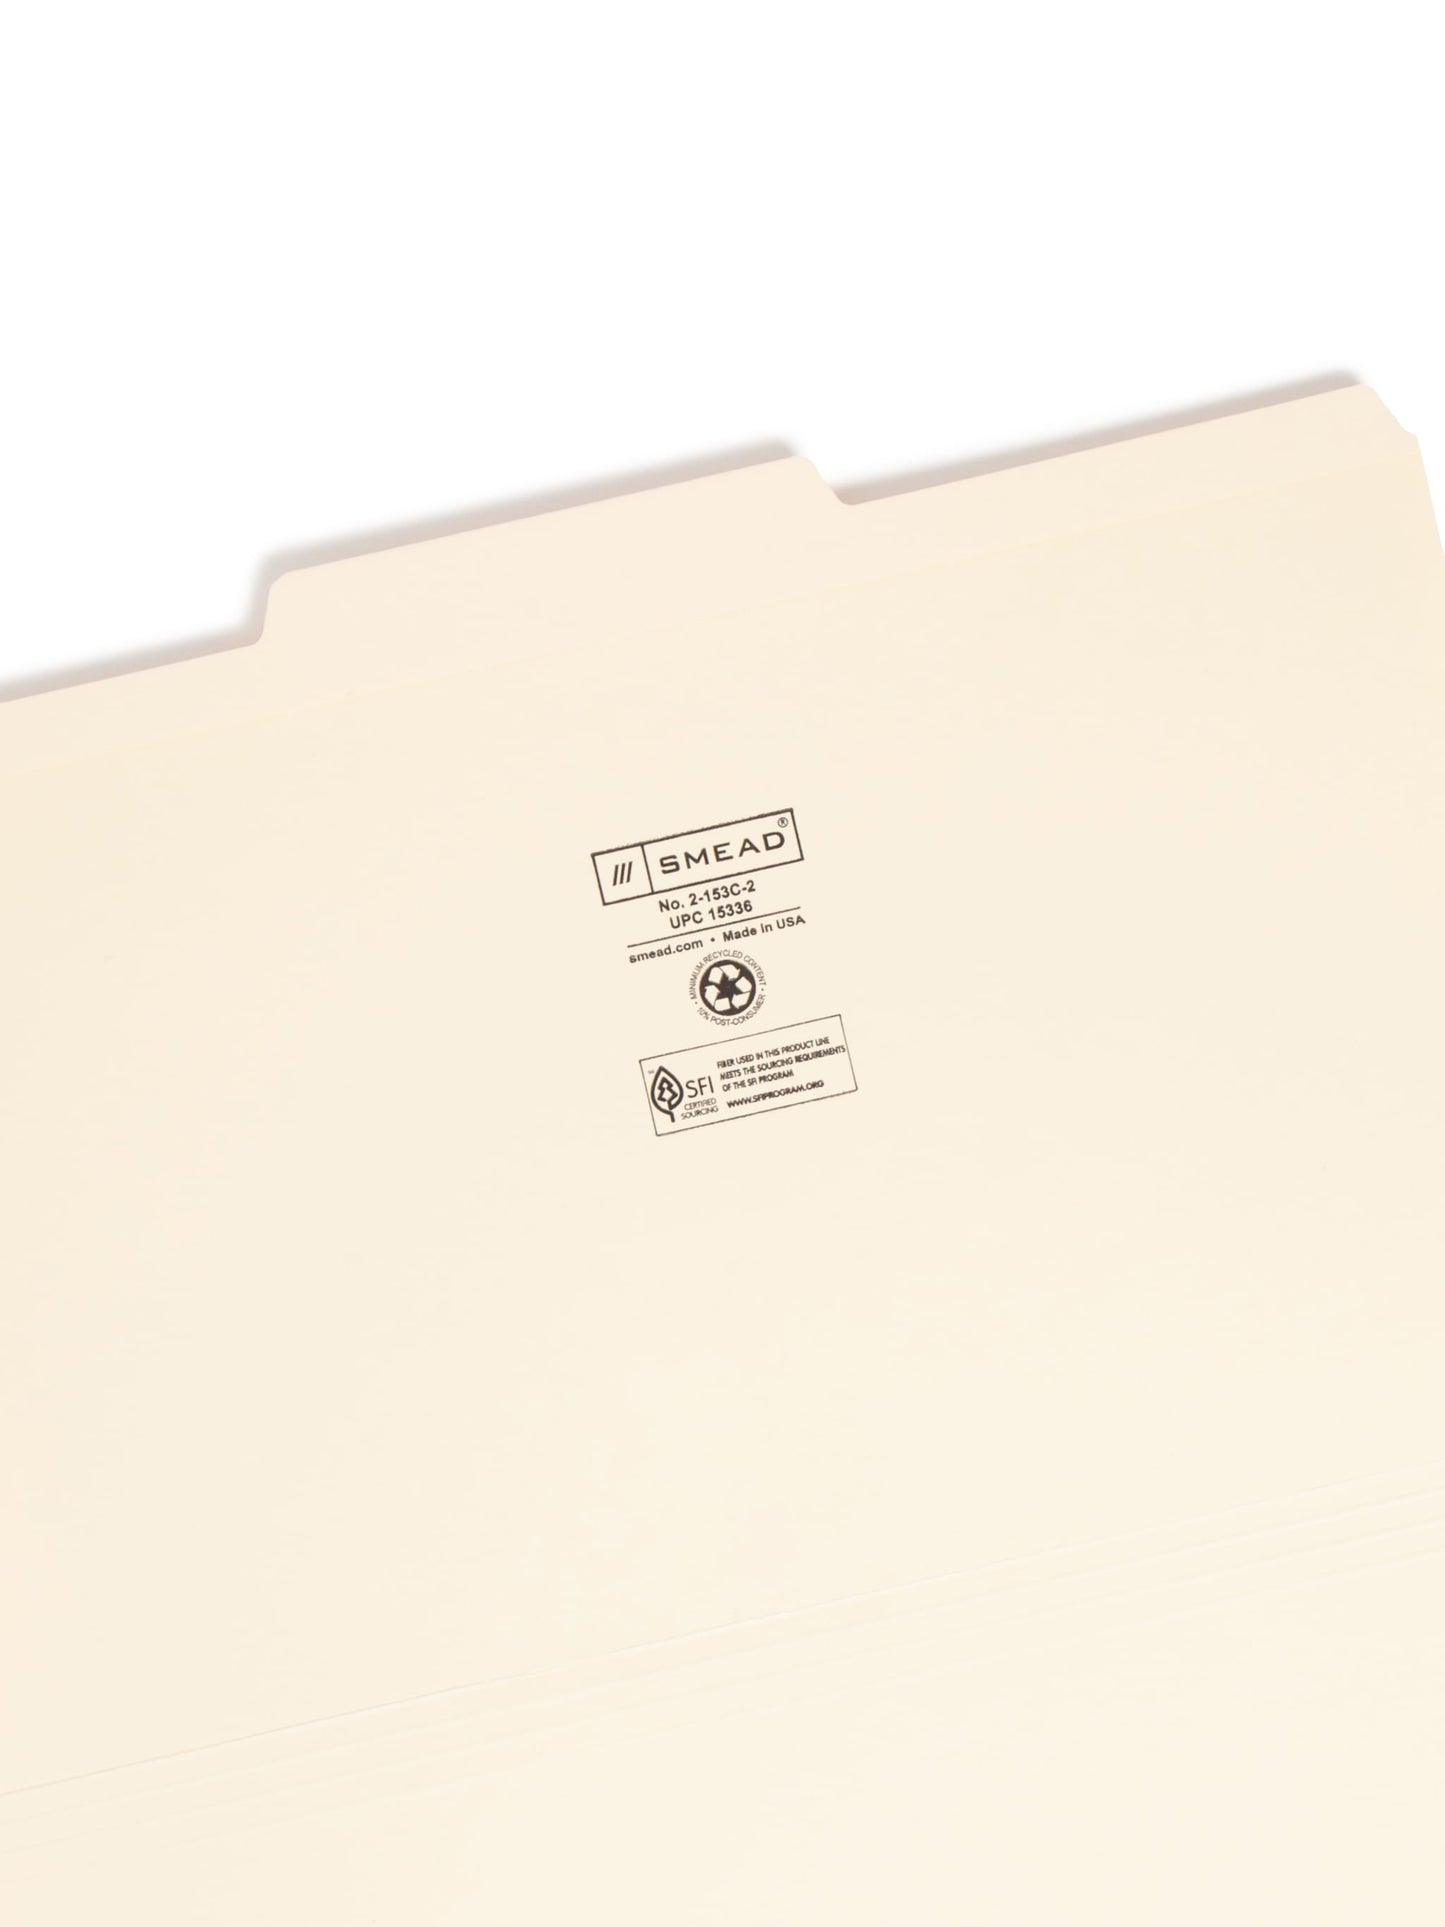 Reinforced Tab File Folders, 1/3-Cut Center Tab, Manila Color, Legal Size, Set of 100, 086486153362